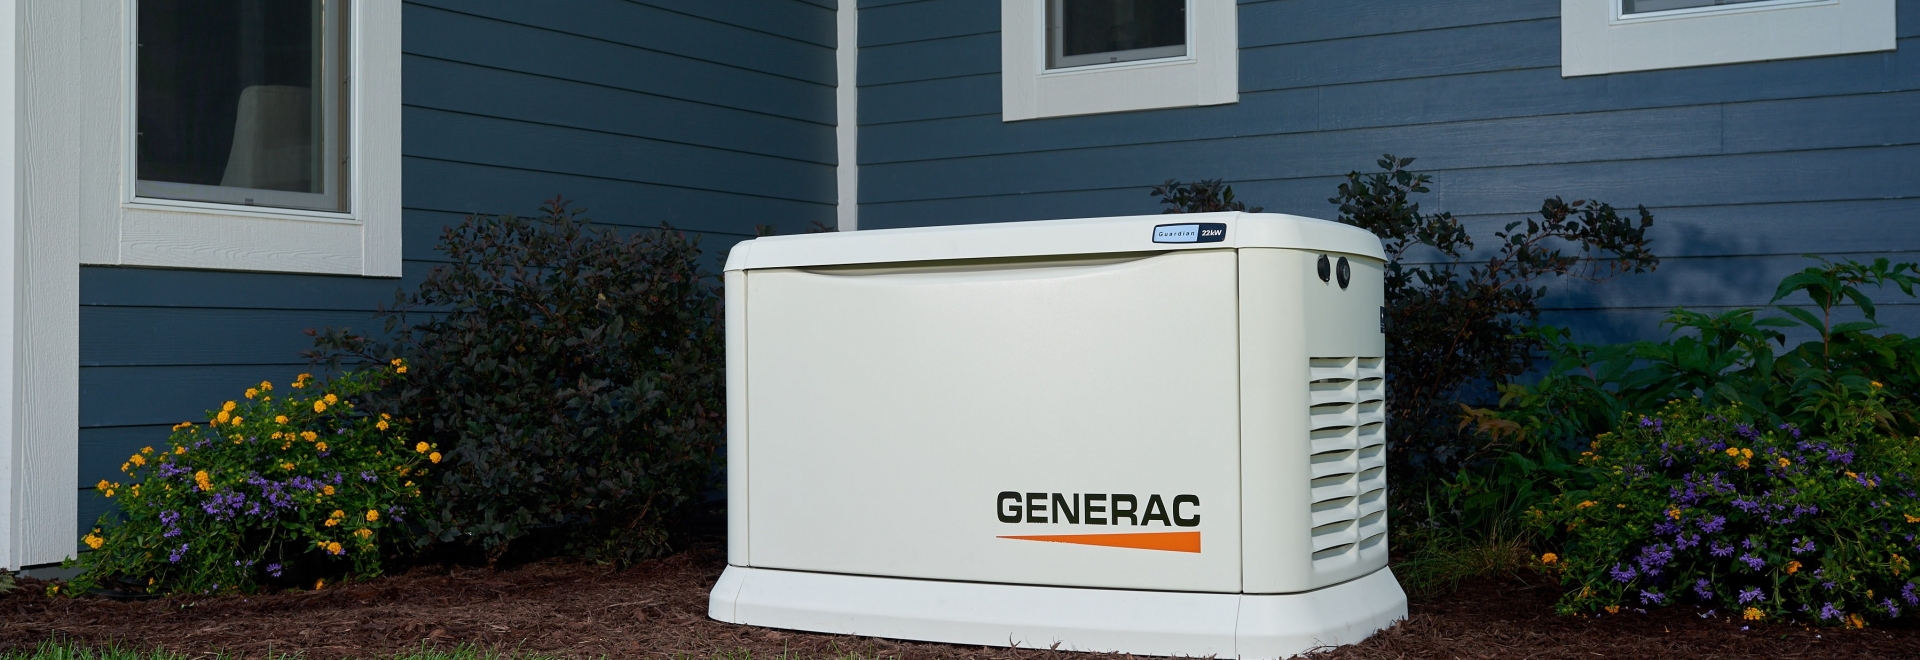 Generac Generator Outside of Beautiful Blue Home